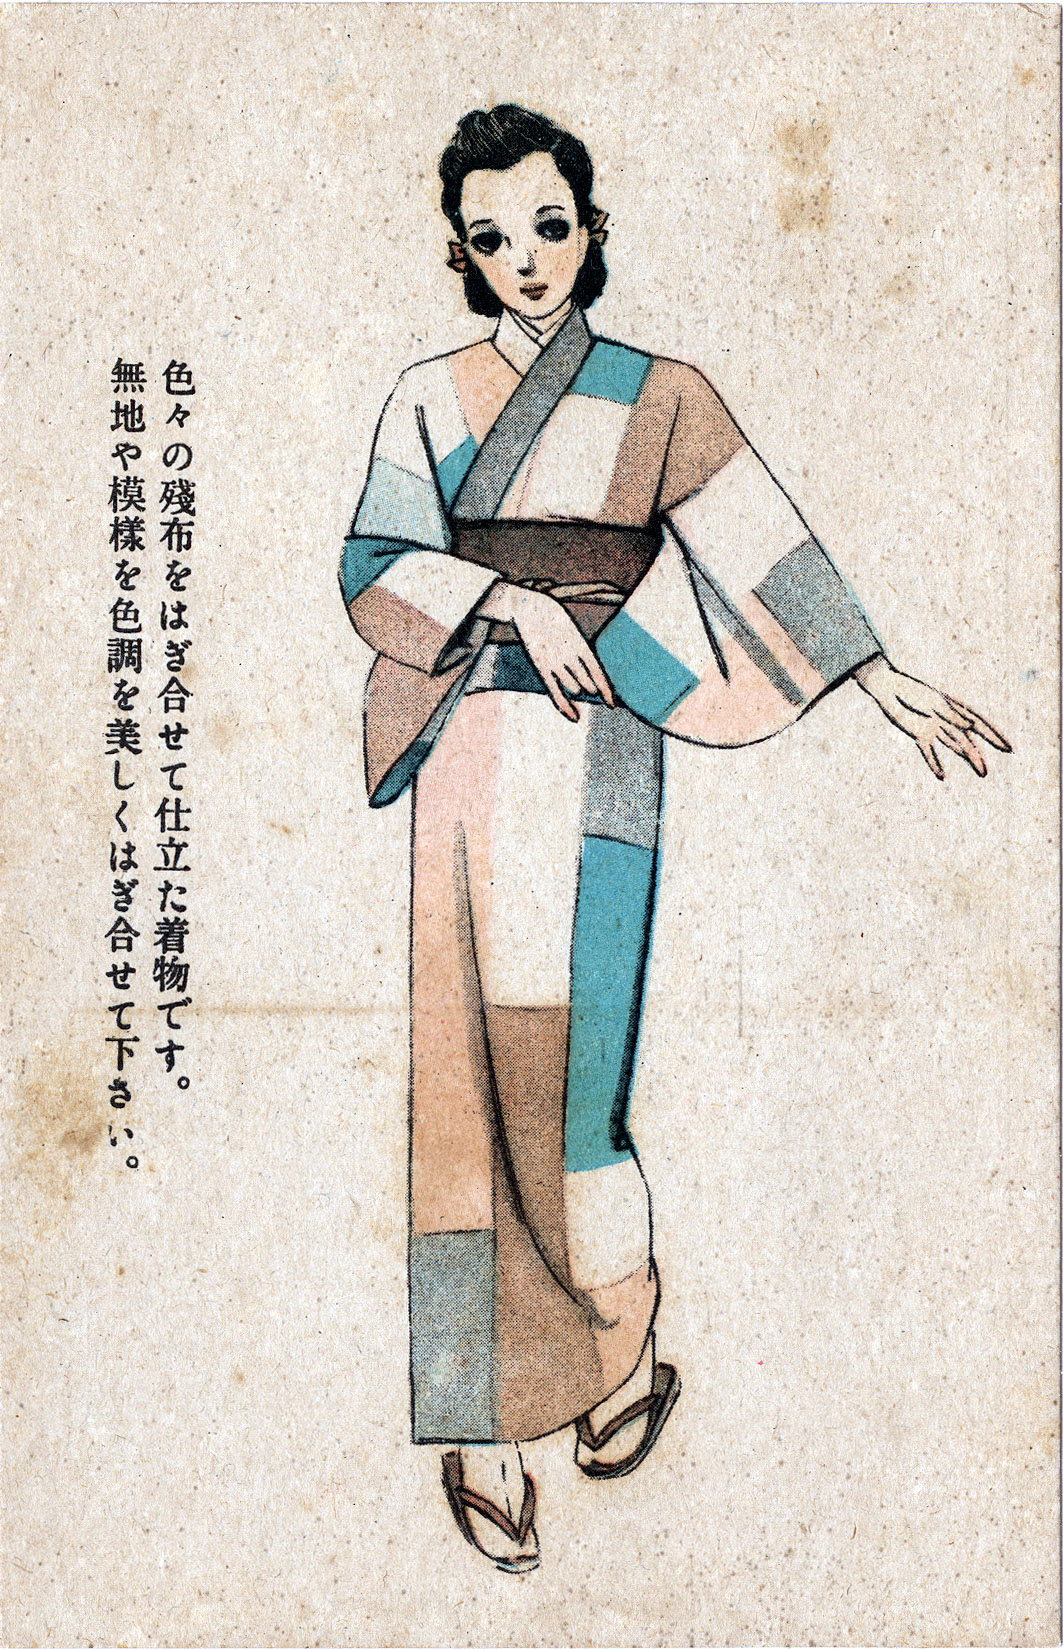 Nakahara Jun’ichi fashion illustrations, c. 1945-1948. | Old Tokyo